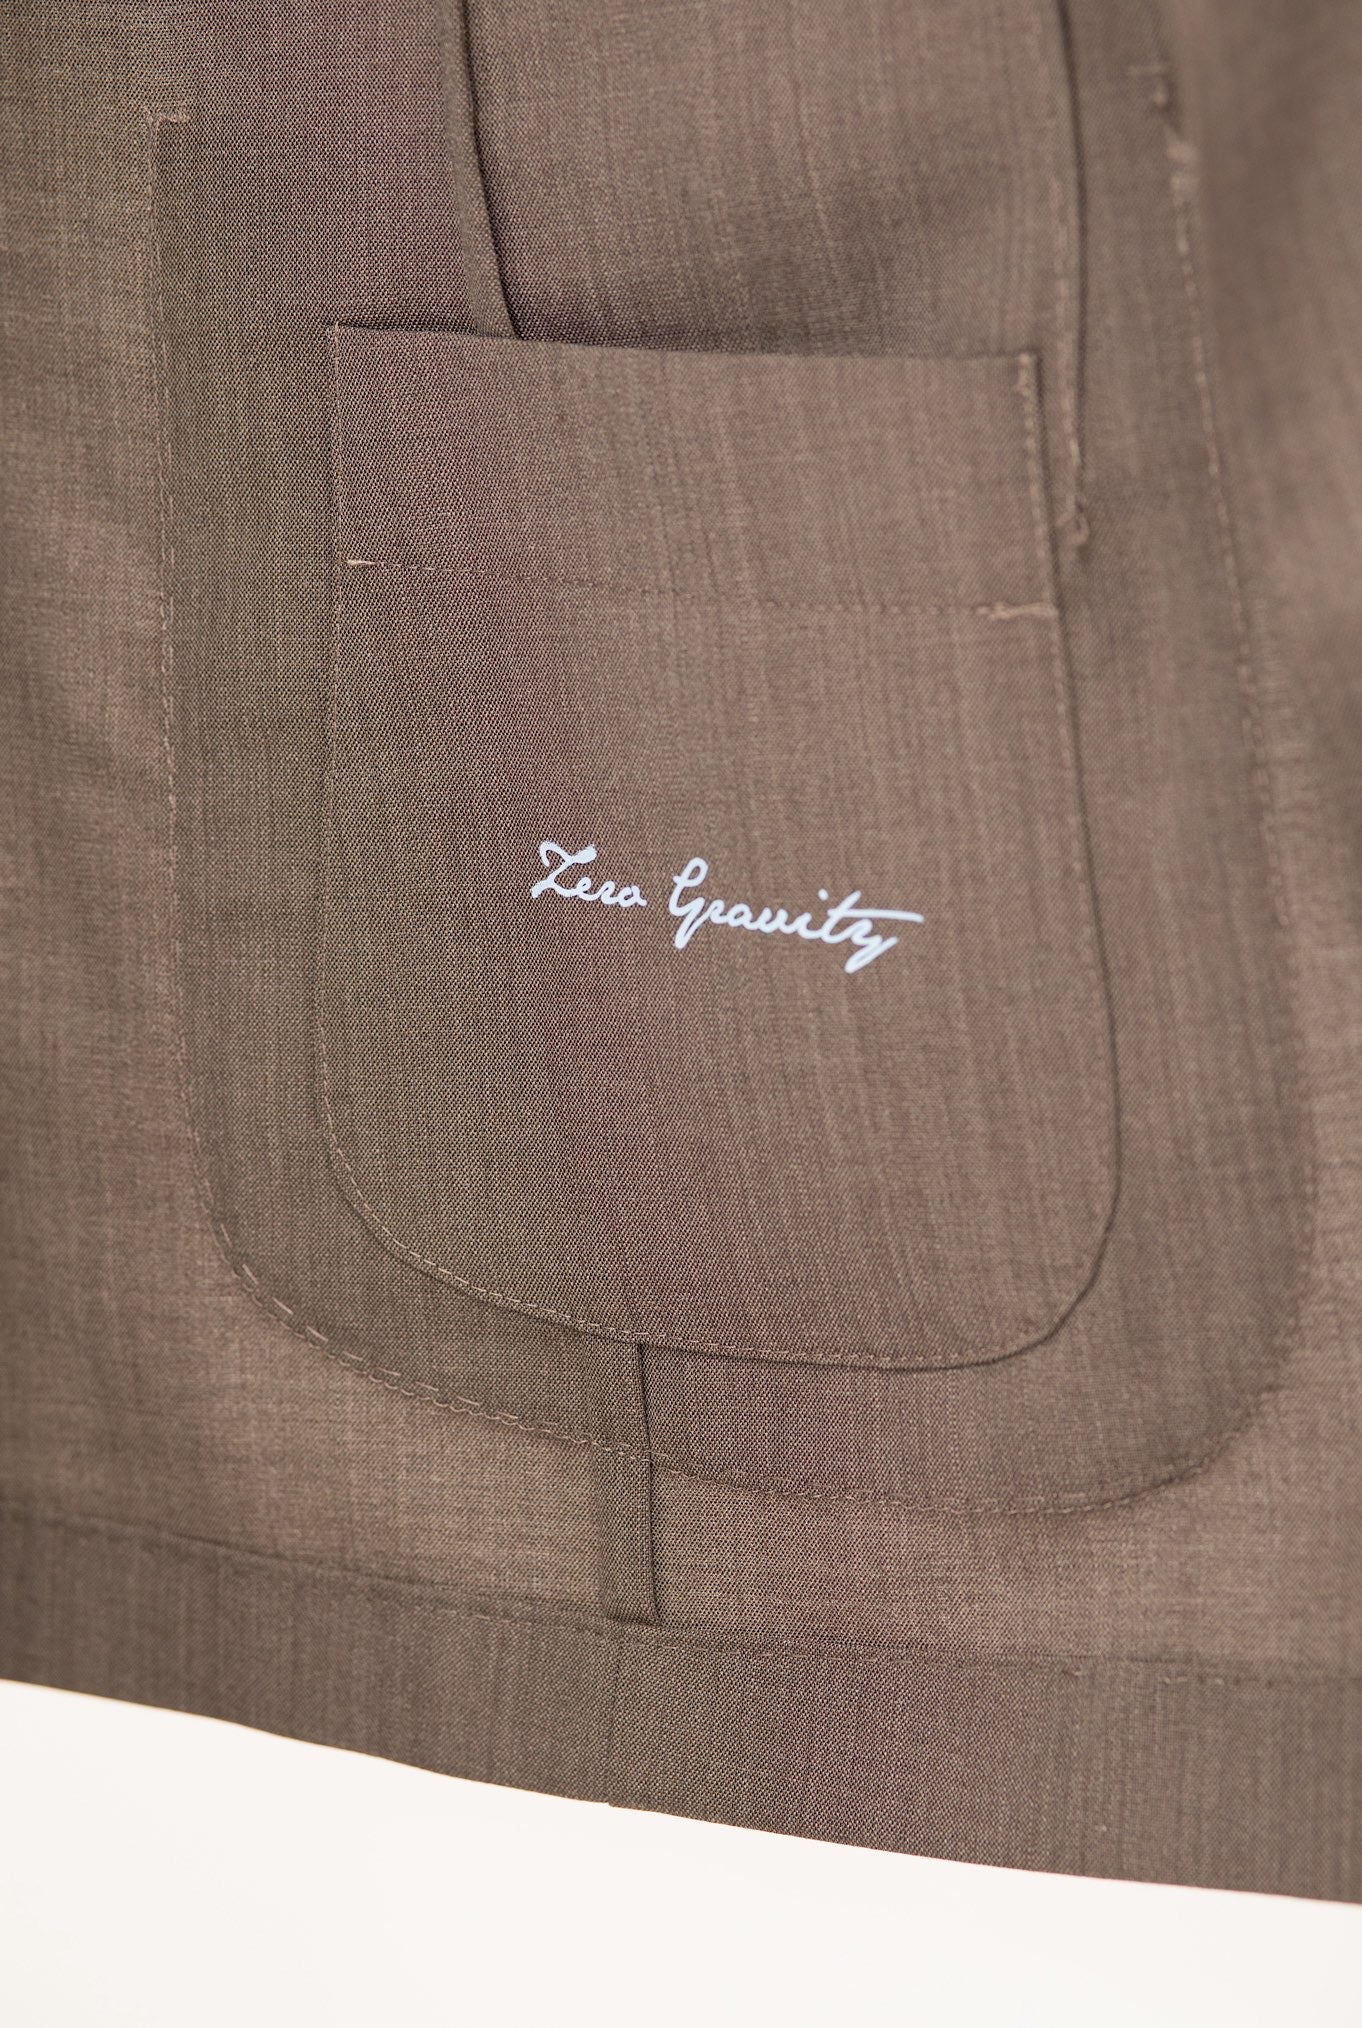 TMB Zero Gravity Double-breasted Suit in Dark Brown Wool